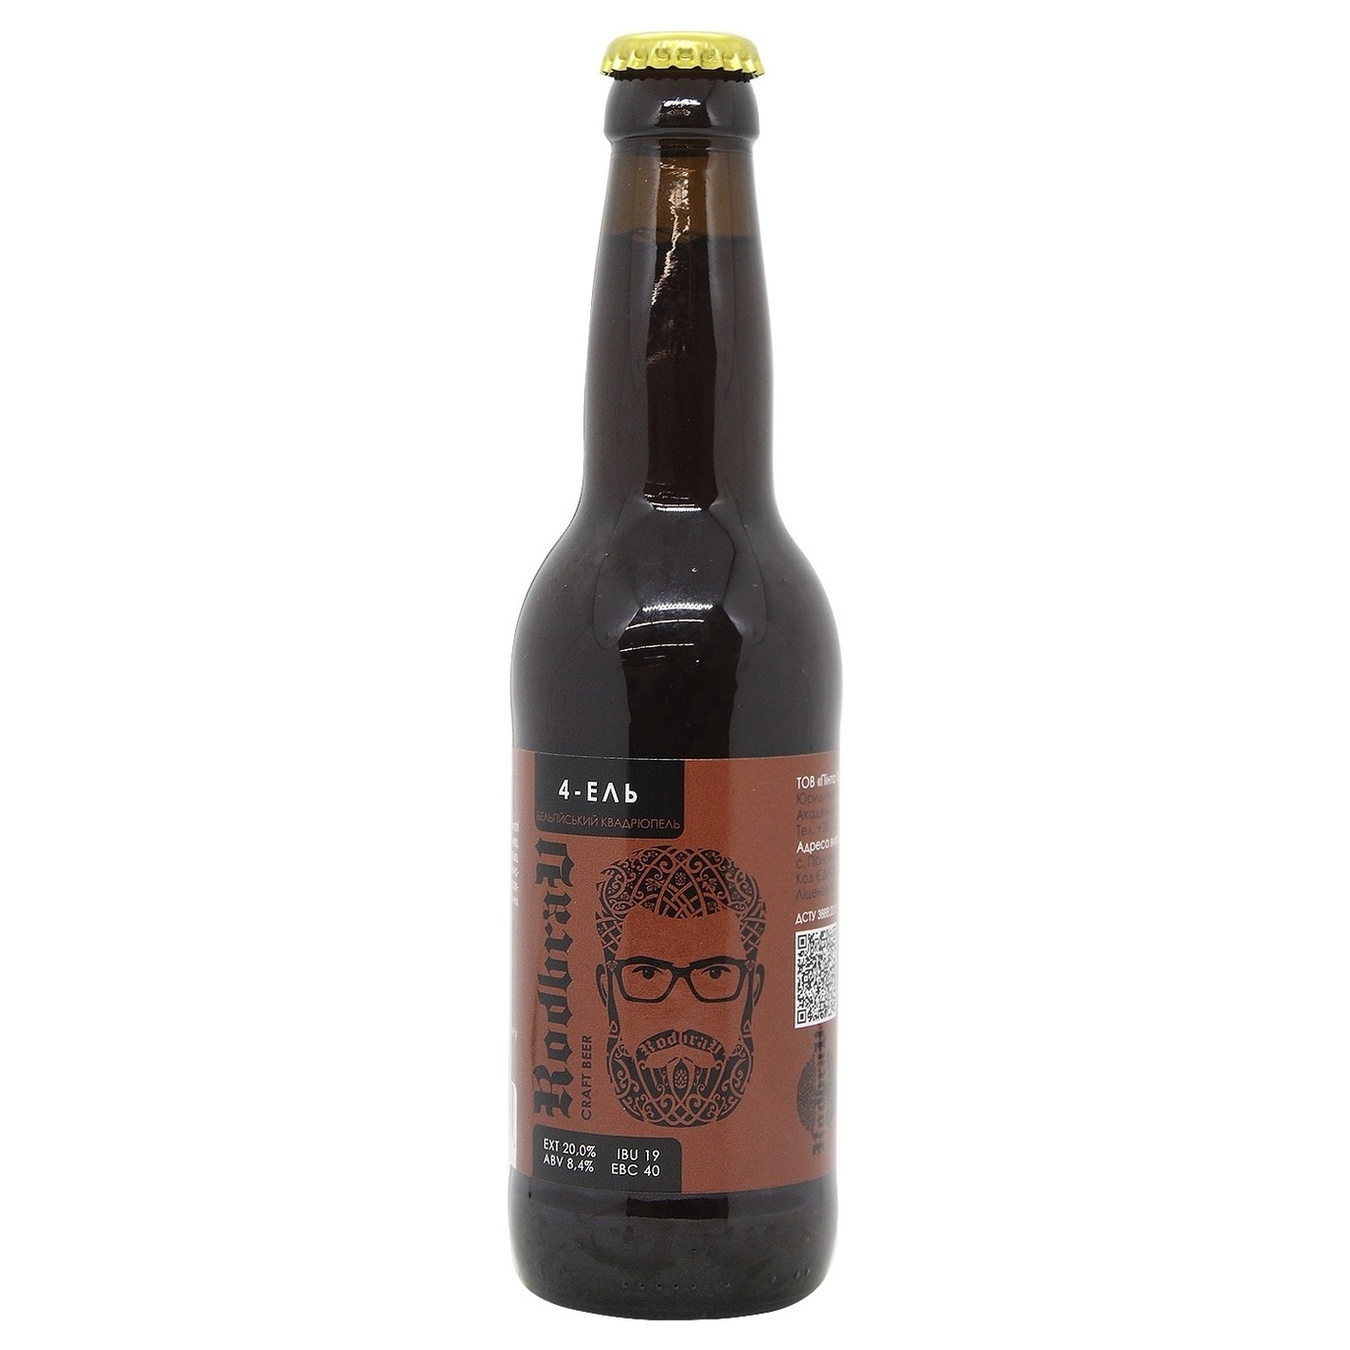 Semi-dark beer Rodbrau Belgian Quadrupel 4-El 8.4% 0.33l glass